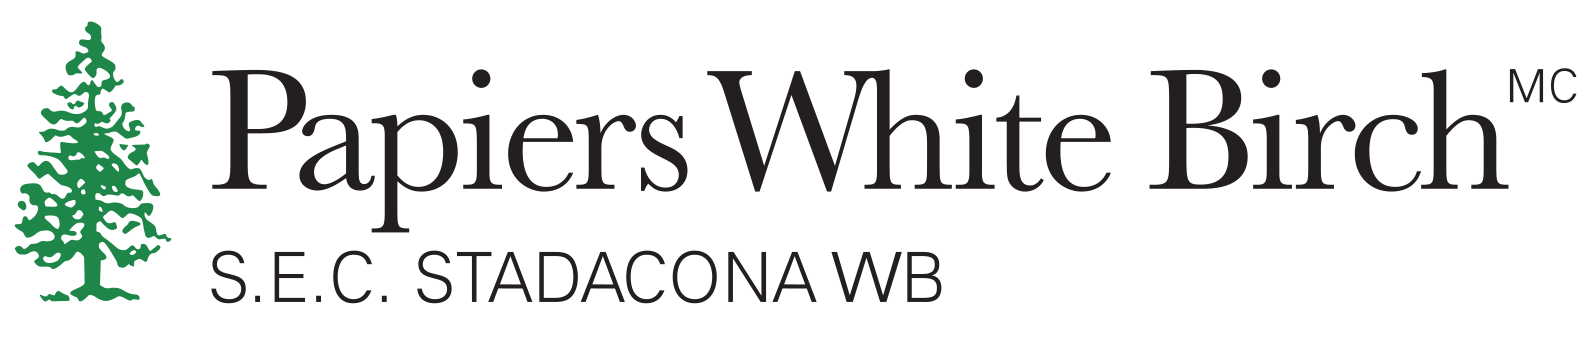 Papiers white birch logo